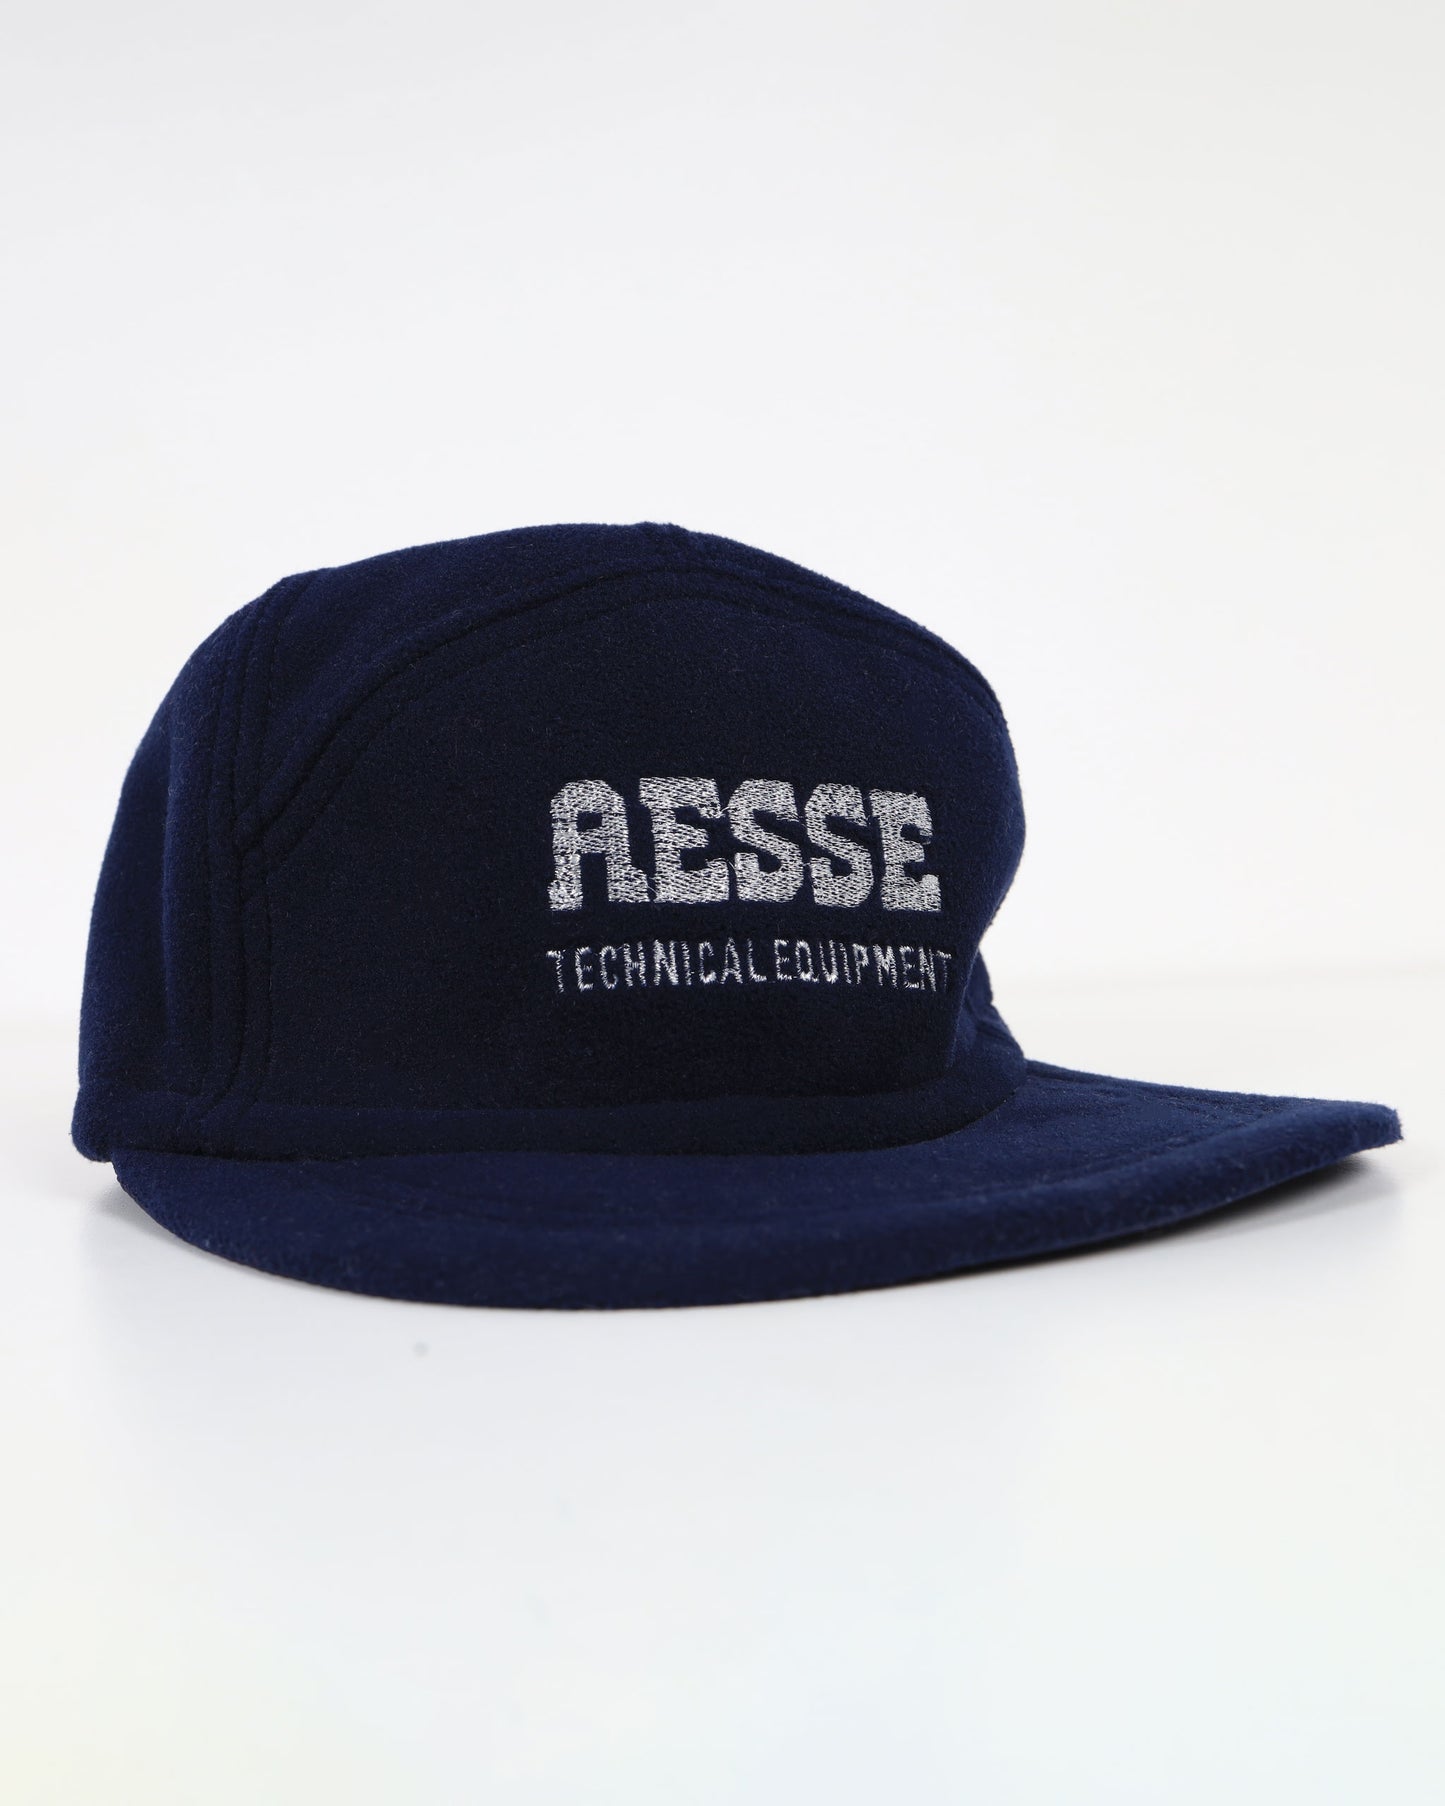 Vintage Aesse Fleece Hat